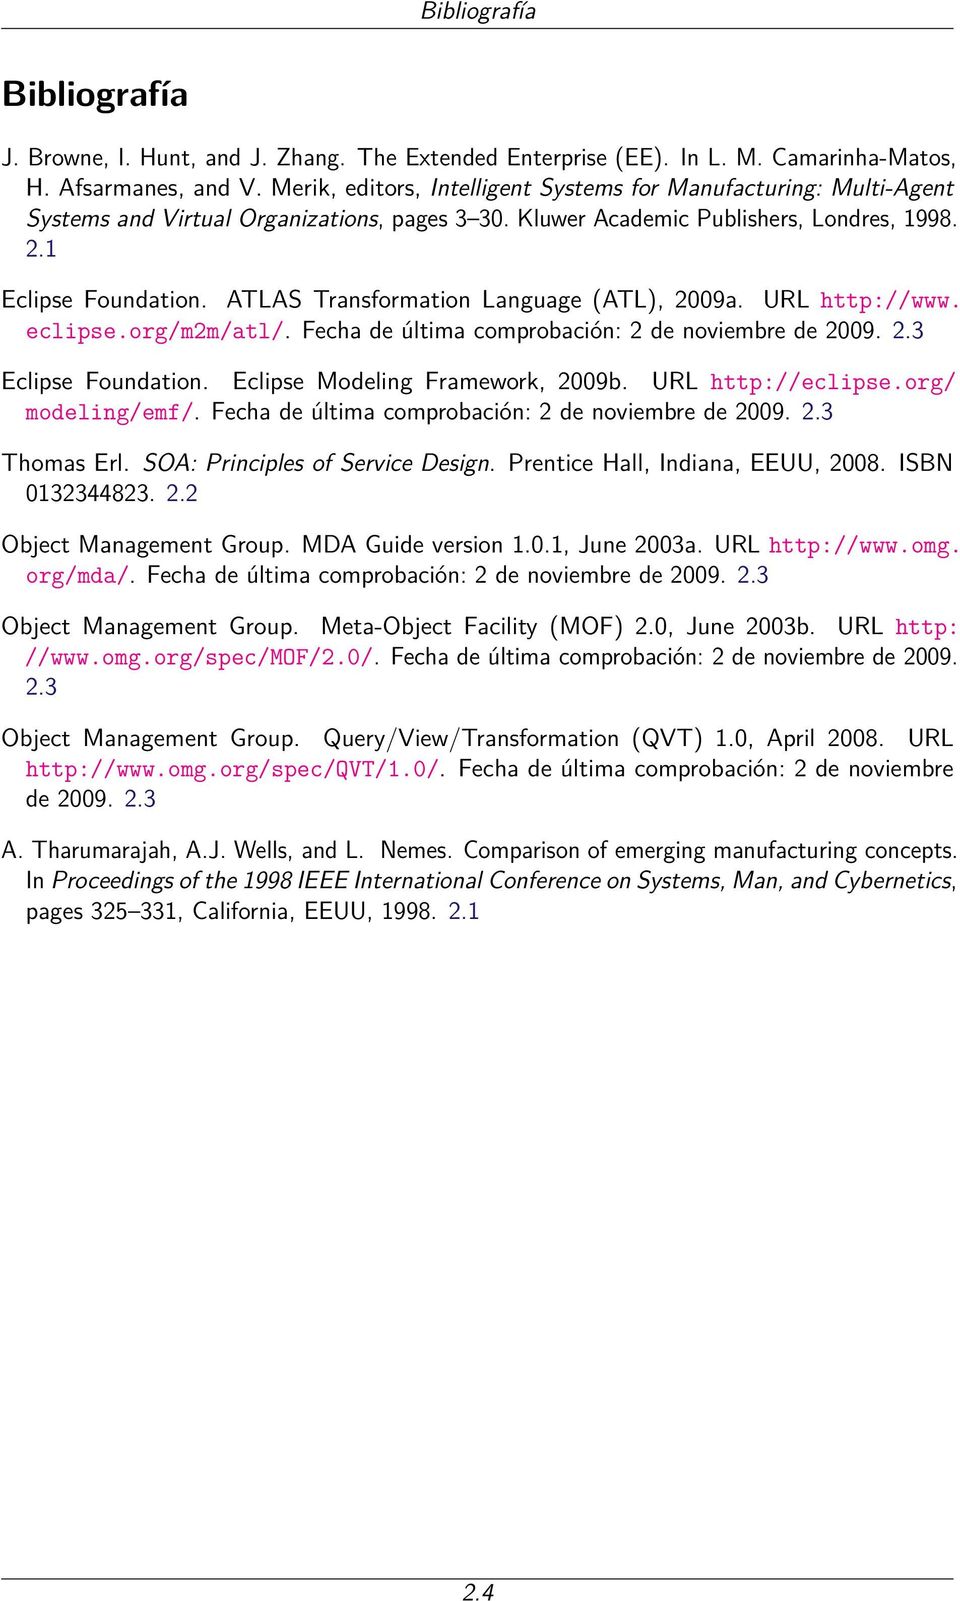 ATLAS Transformation Language (ATL), 2009a. URL http://www. eclipse.org/m2m/atl/. Fecha de última comprobación: 2 de noviembre de 2009. 2.3 Eclipse Foundation. Eclipse Modeling Framework, 2009b.